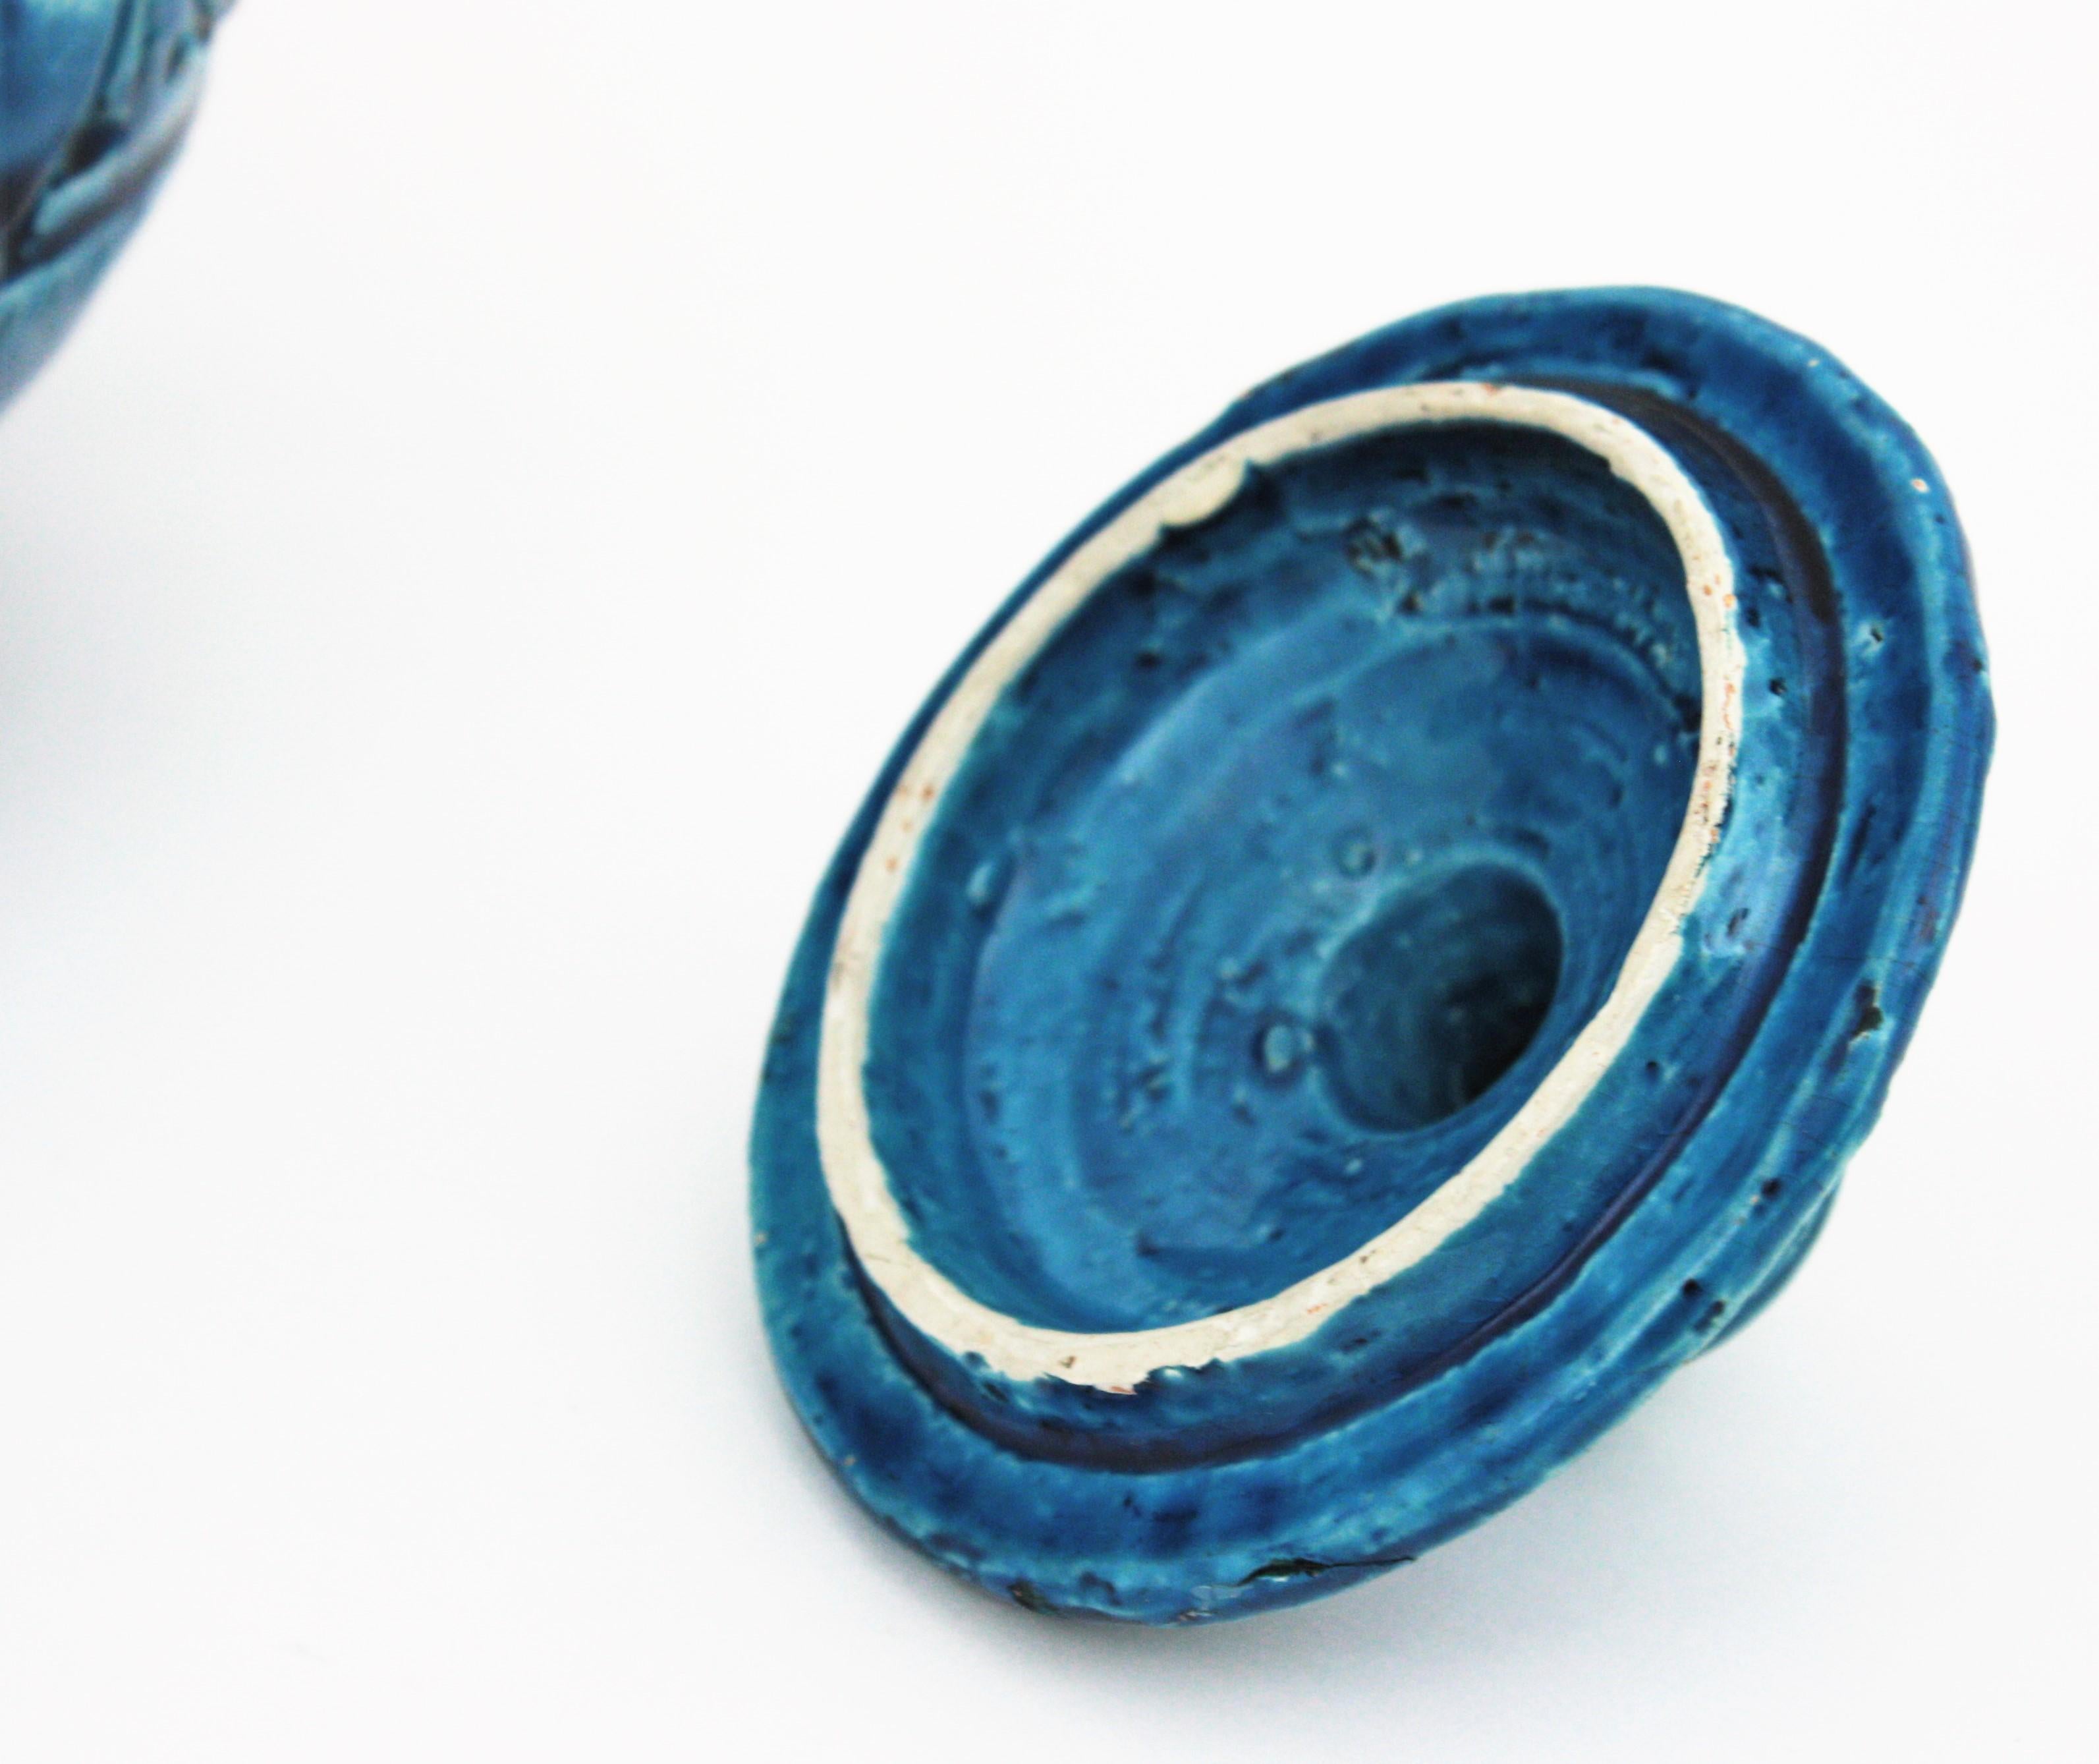 Sic Rimini Blu Glazed Ceramic Large Lidded Vessel / Box Bitossi Aldo Londi Style For Sale 7